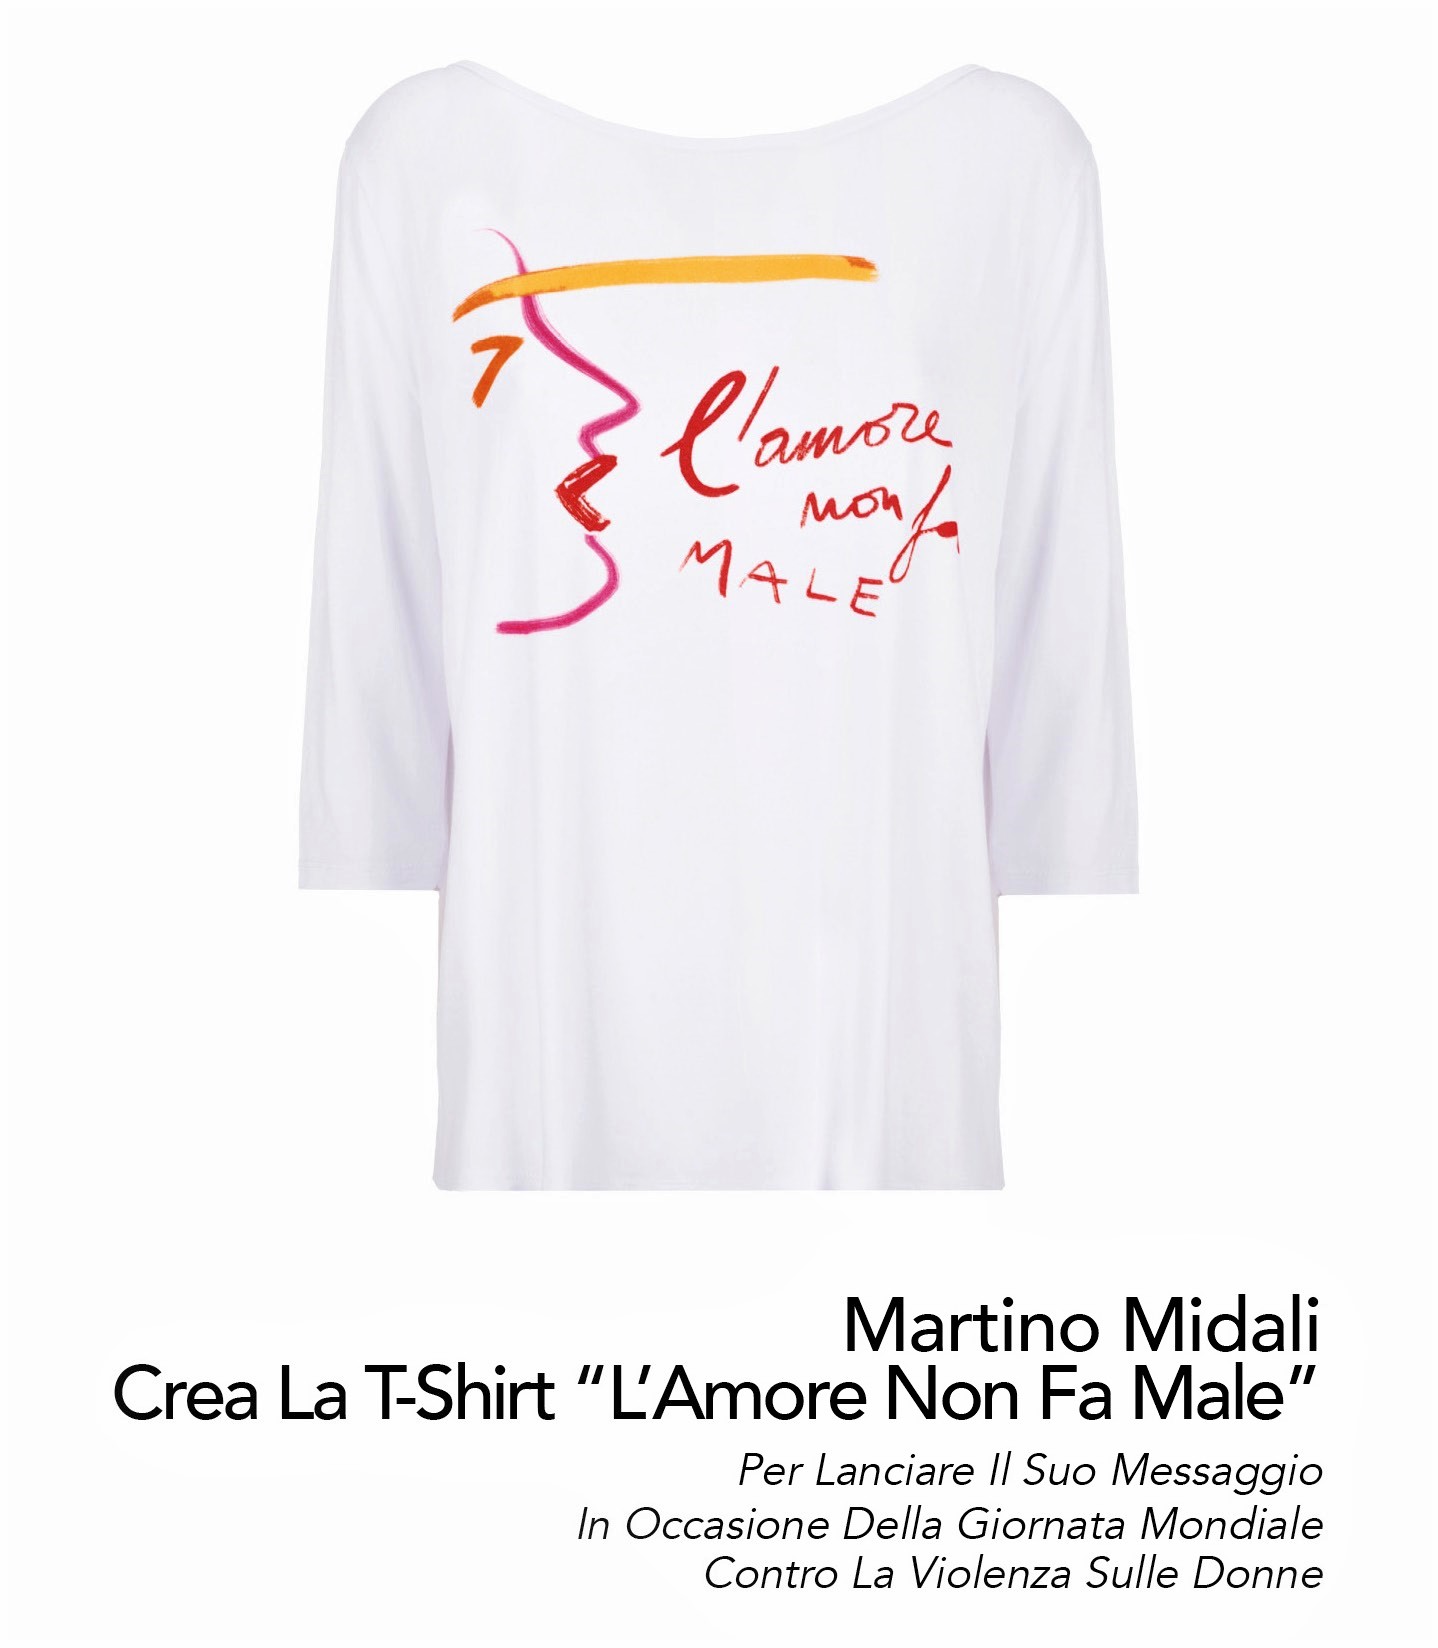 Martino Midali crea la t-shirt